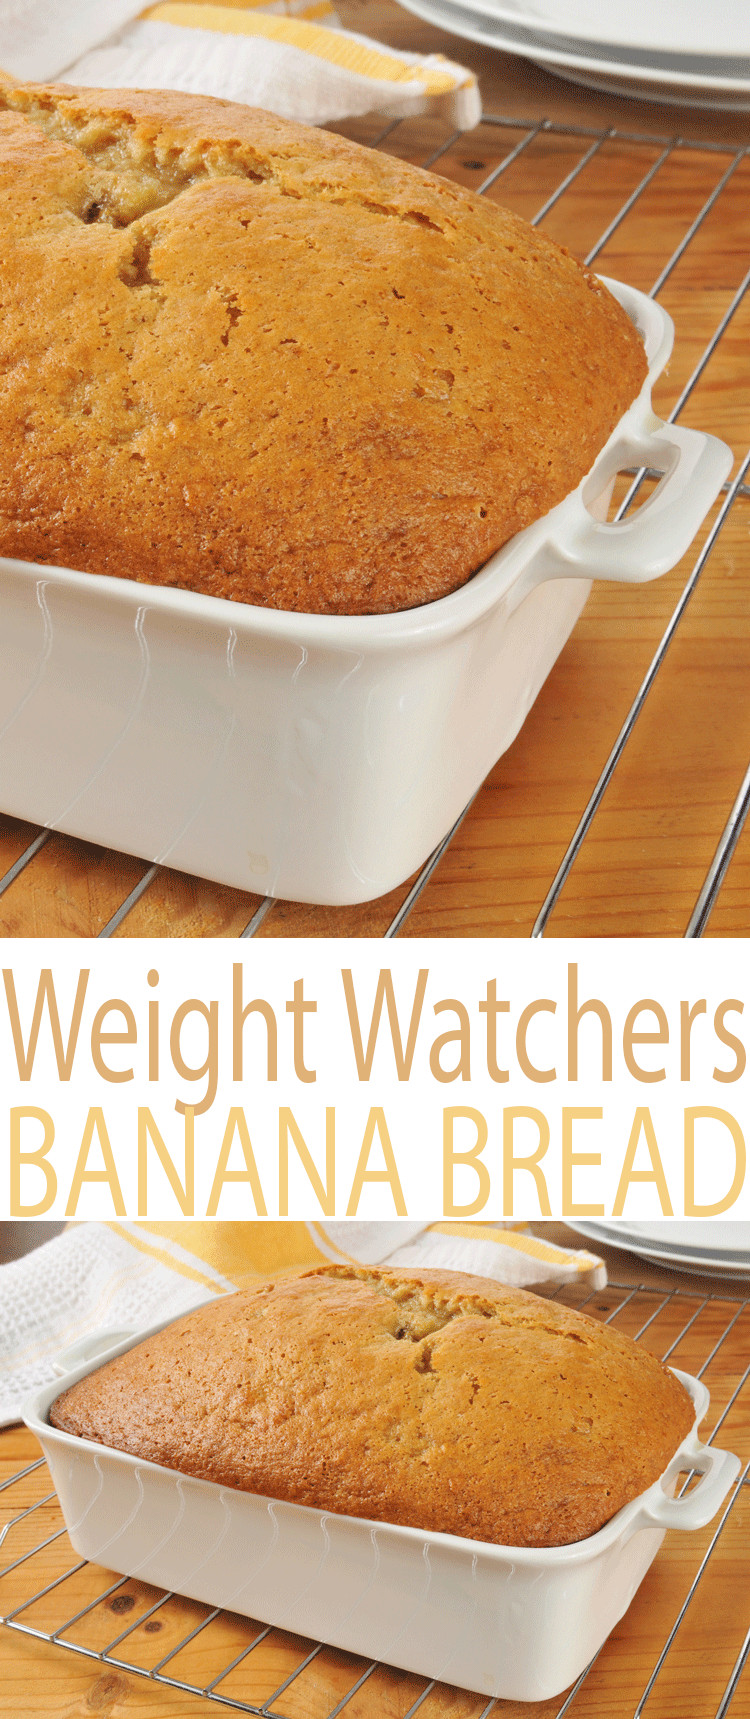 Weight Watchers Banana Oatmeal Bread
 Weight Watchers Banana Bread Recipe